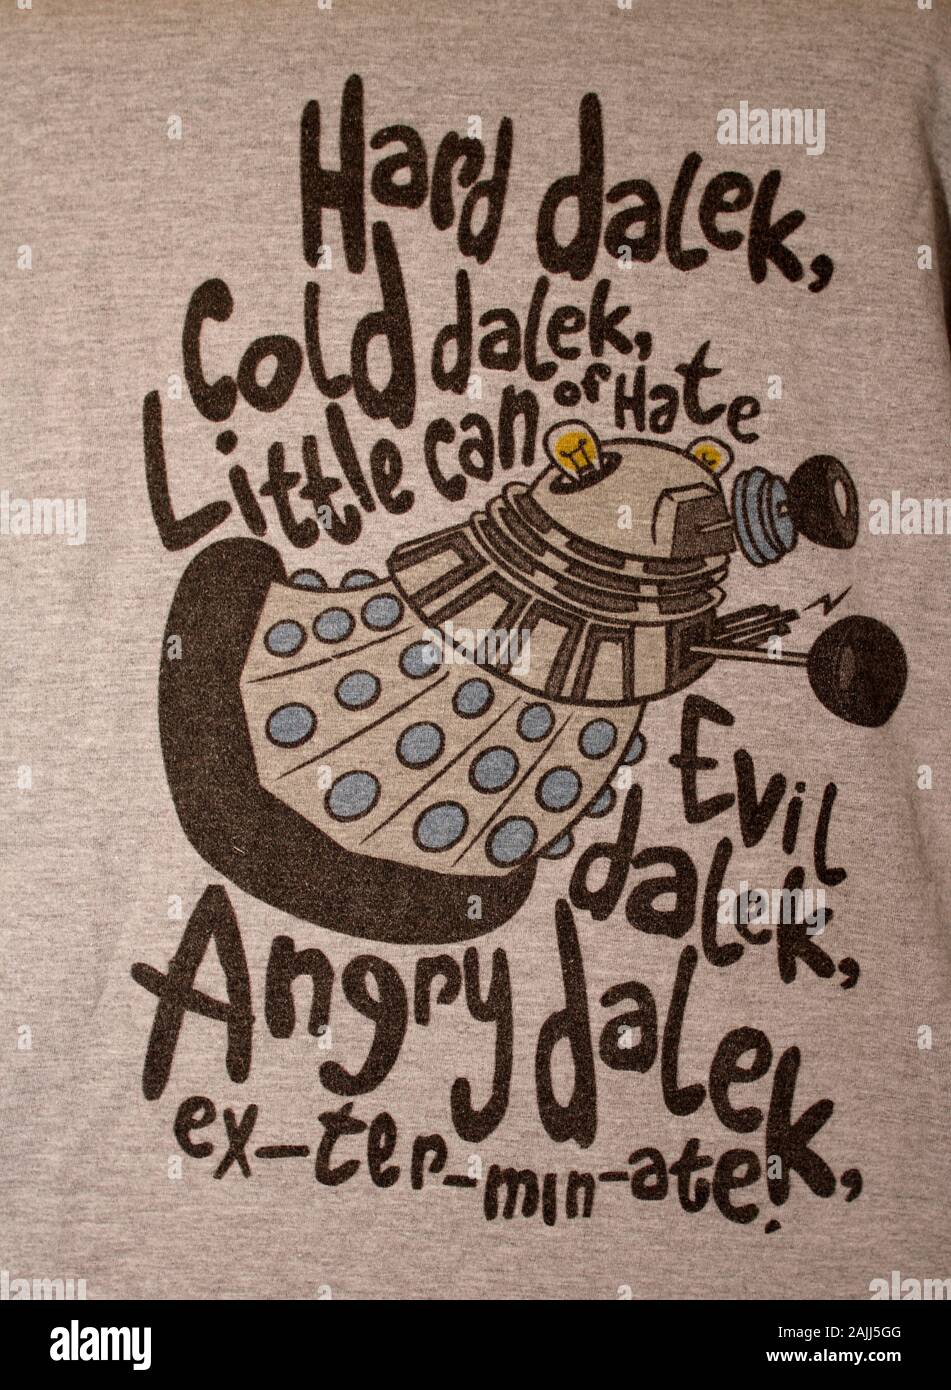 Big Bang T-Shirt, Hard, Dalek, Cold Dalek, Little Can of hate, Evil Dalek, Angry Dalek, Ex-Ter-Min-ate, Gildan premium cotton, extra large Name: Big B Stock Photo